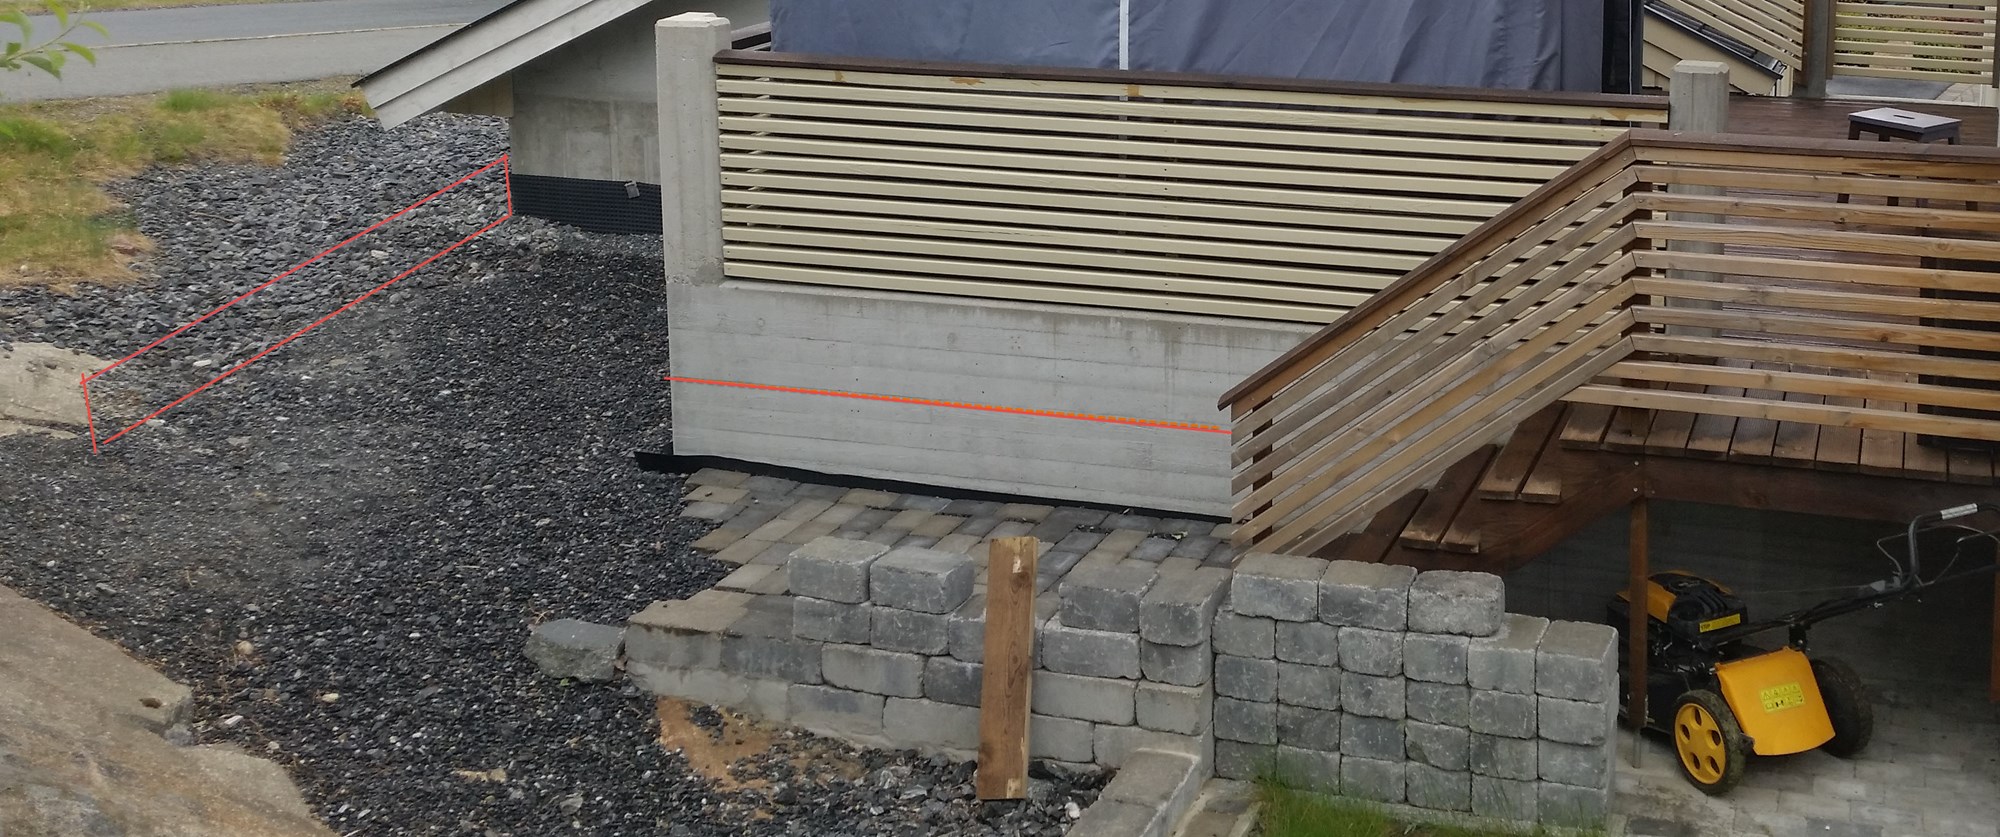 Ulovlig bygd terrasse, alternativer - 2017-06-13_15-10-28.jpg - Andy